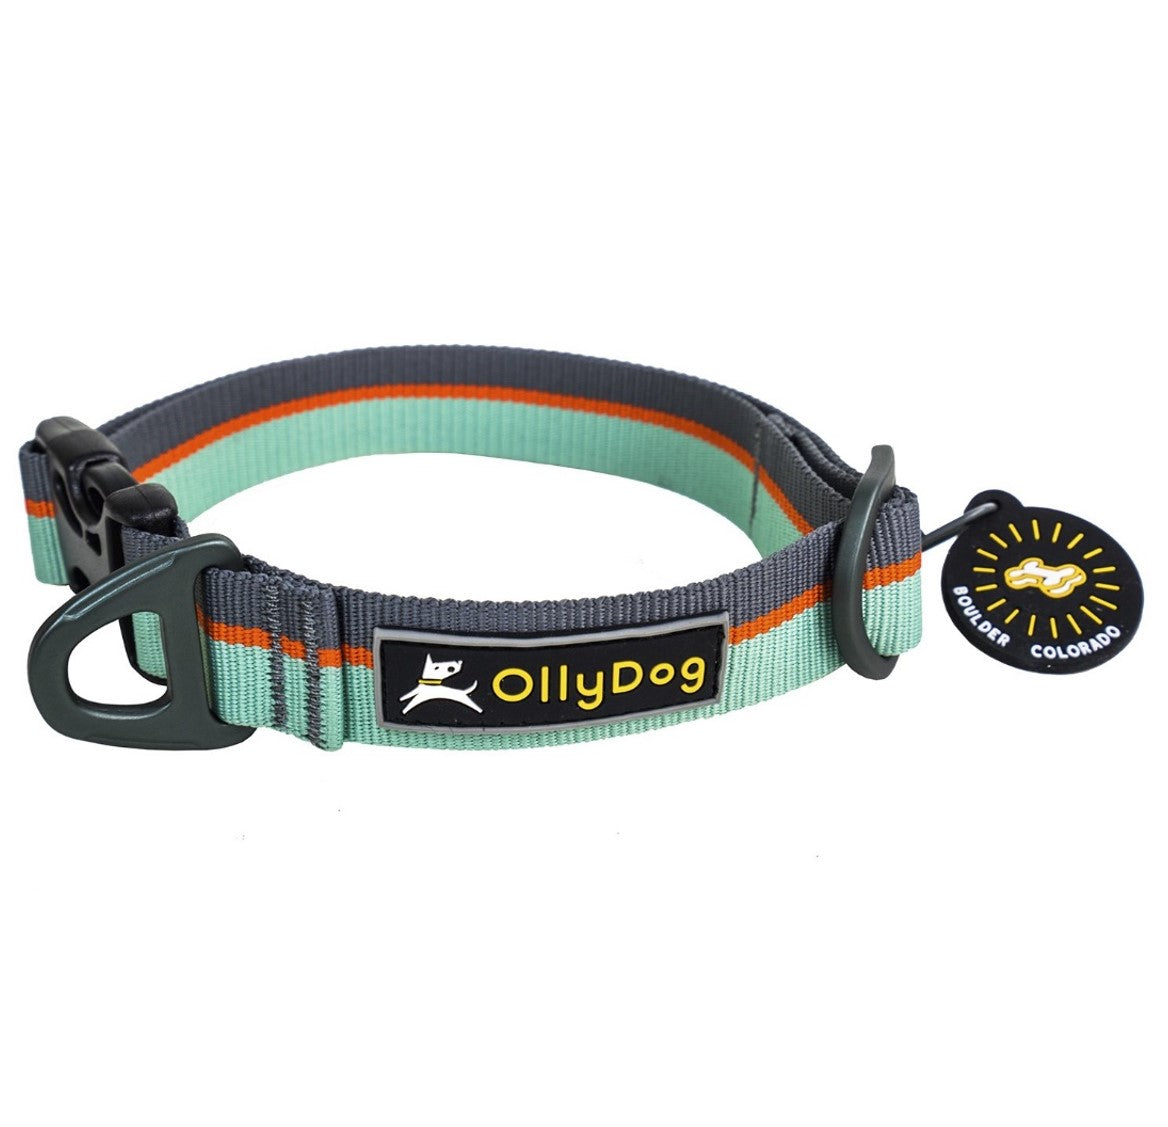 Flagstaff Collar | Adjustable Dog Collar